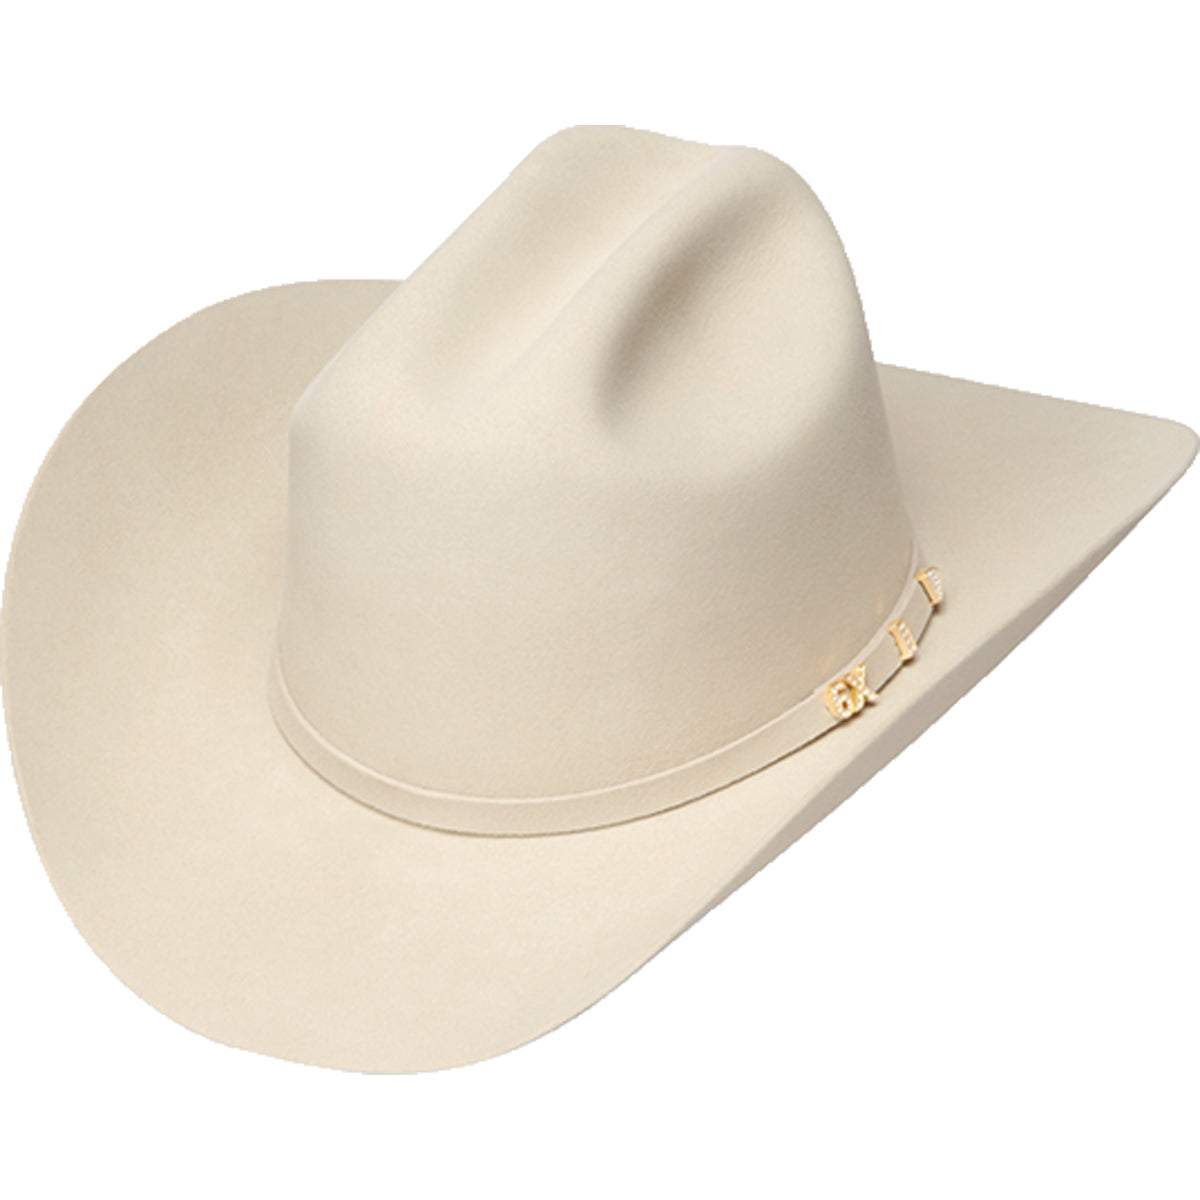 Serratelli 6X Beaver Fur Felt Cowboy Hat